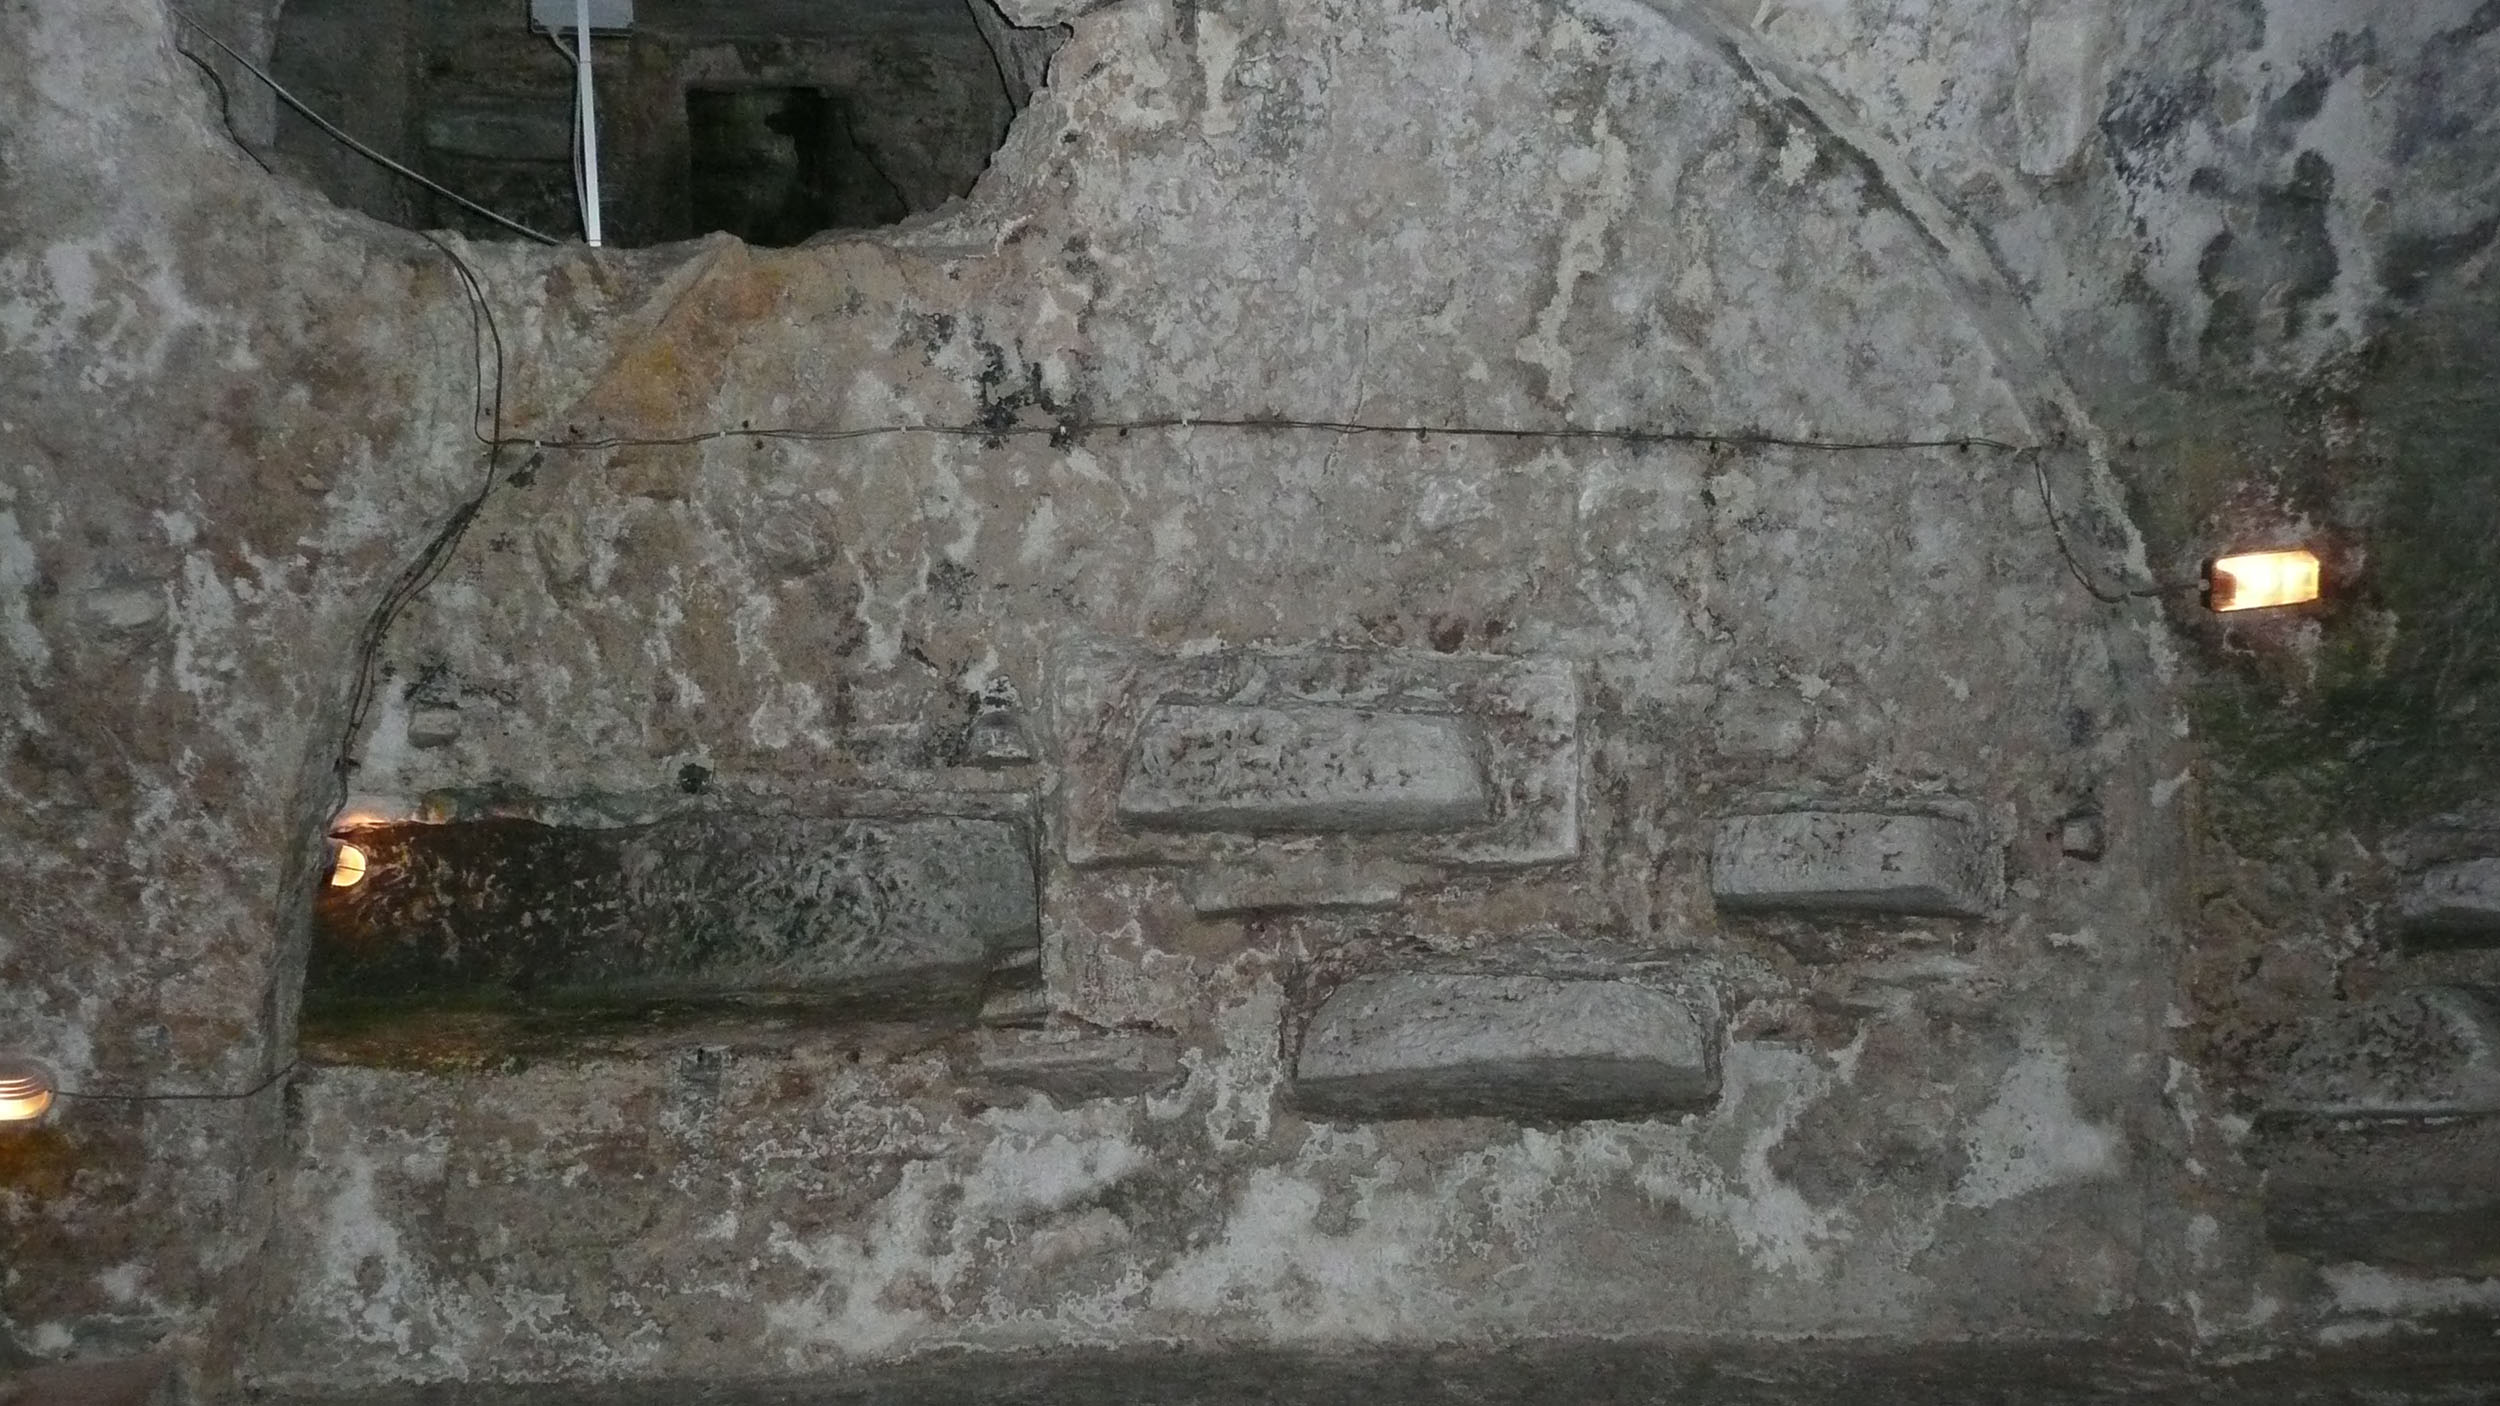 Section inside St Paul's Catacombs Malta